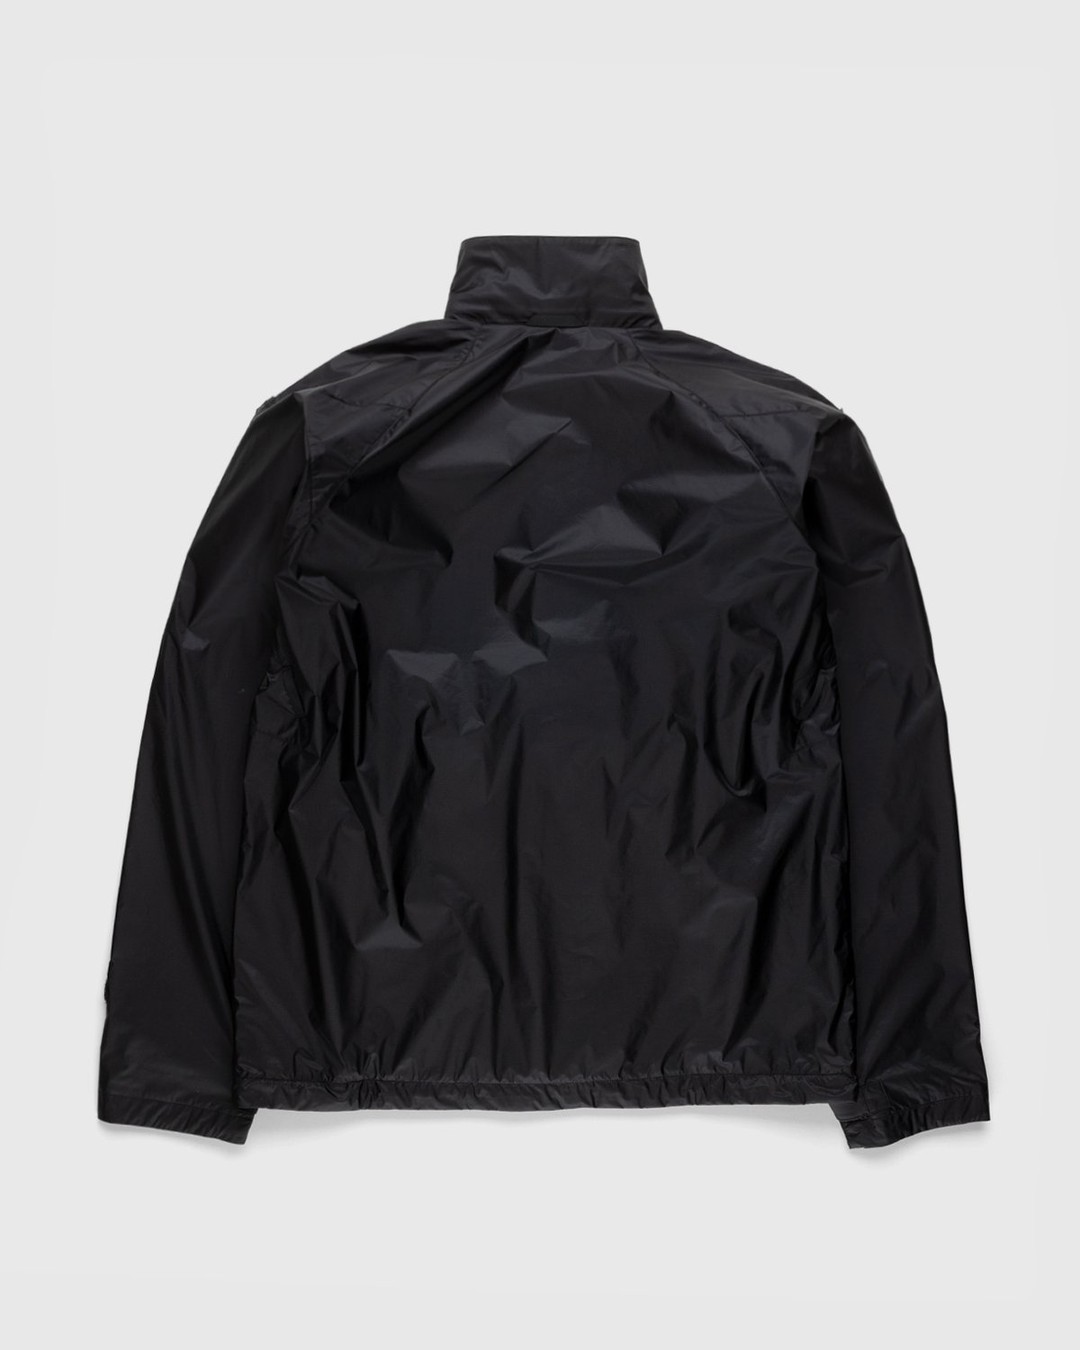 ACRONYM – J95-WS Jacket Black - Outerwear - Black - Image 2